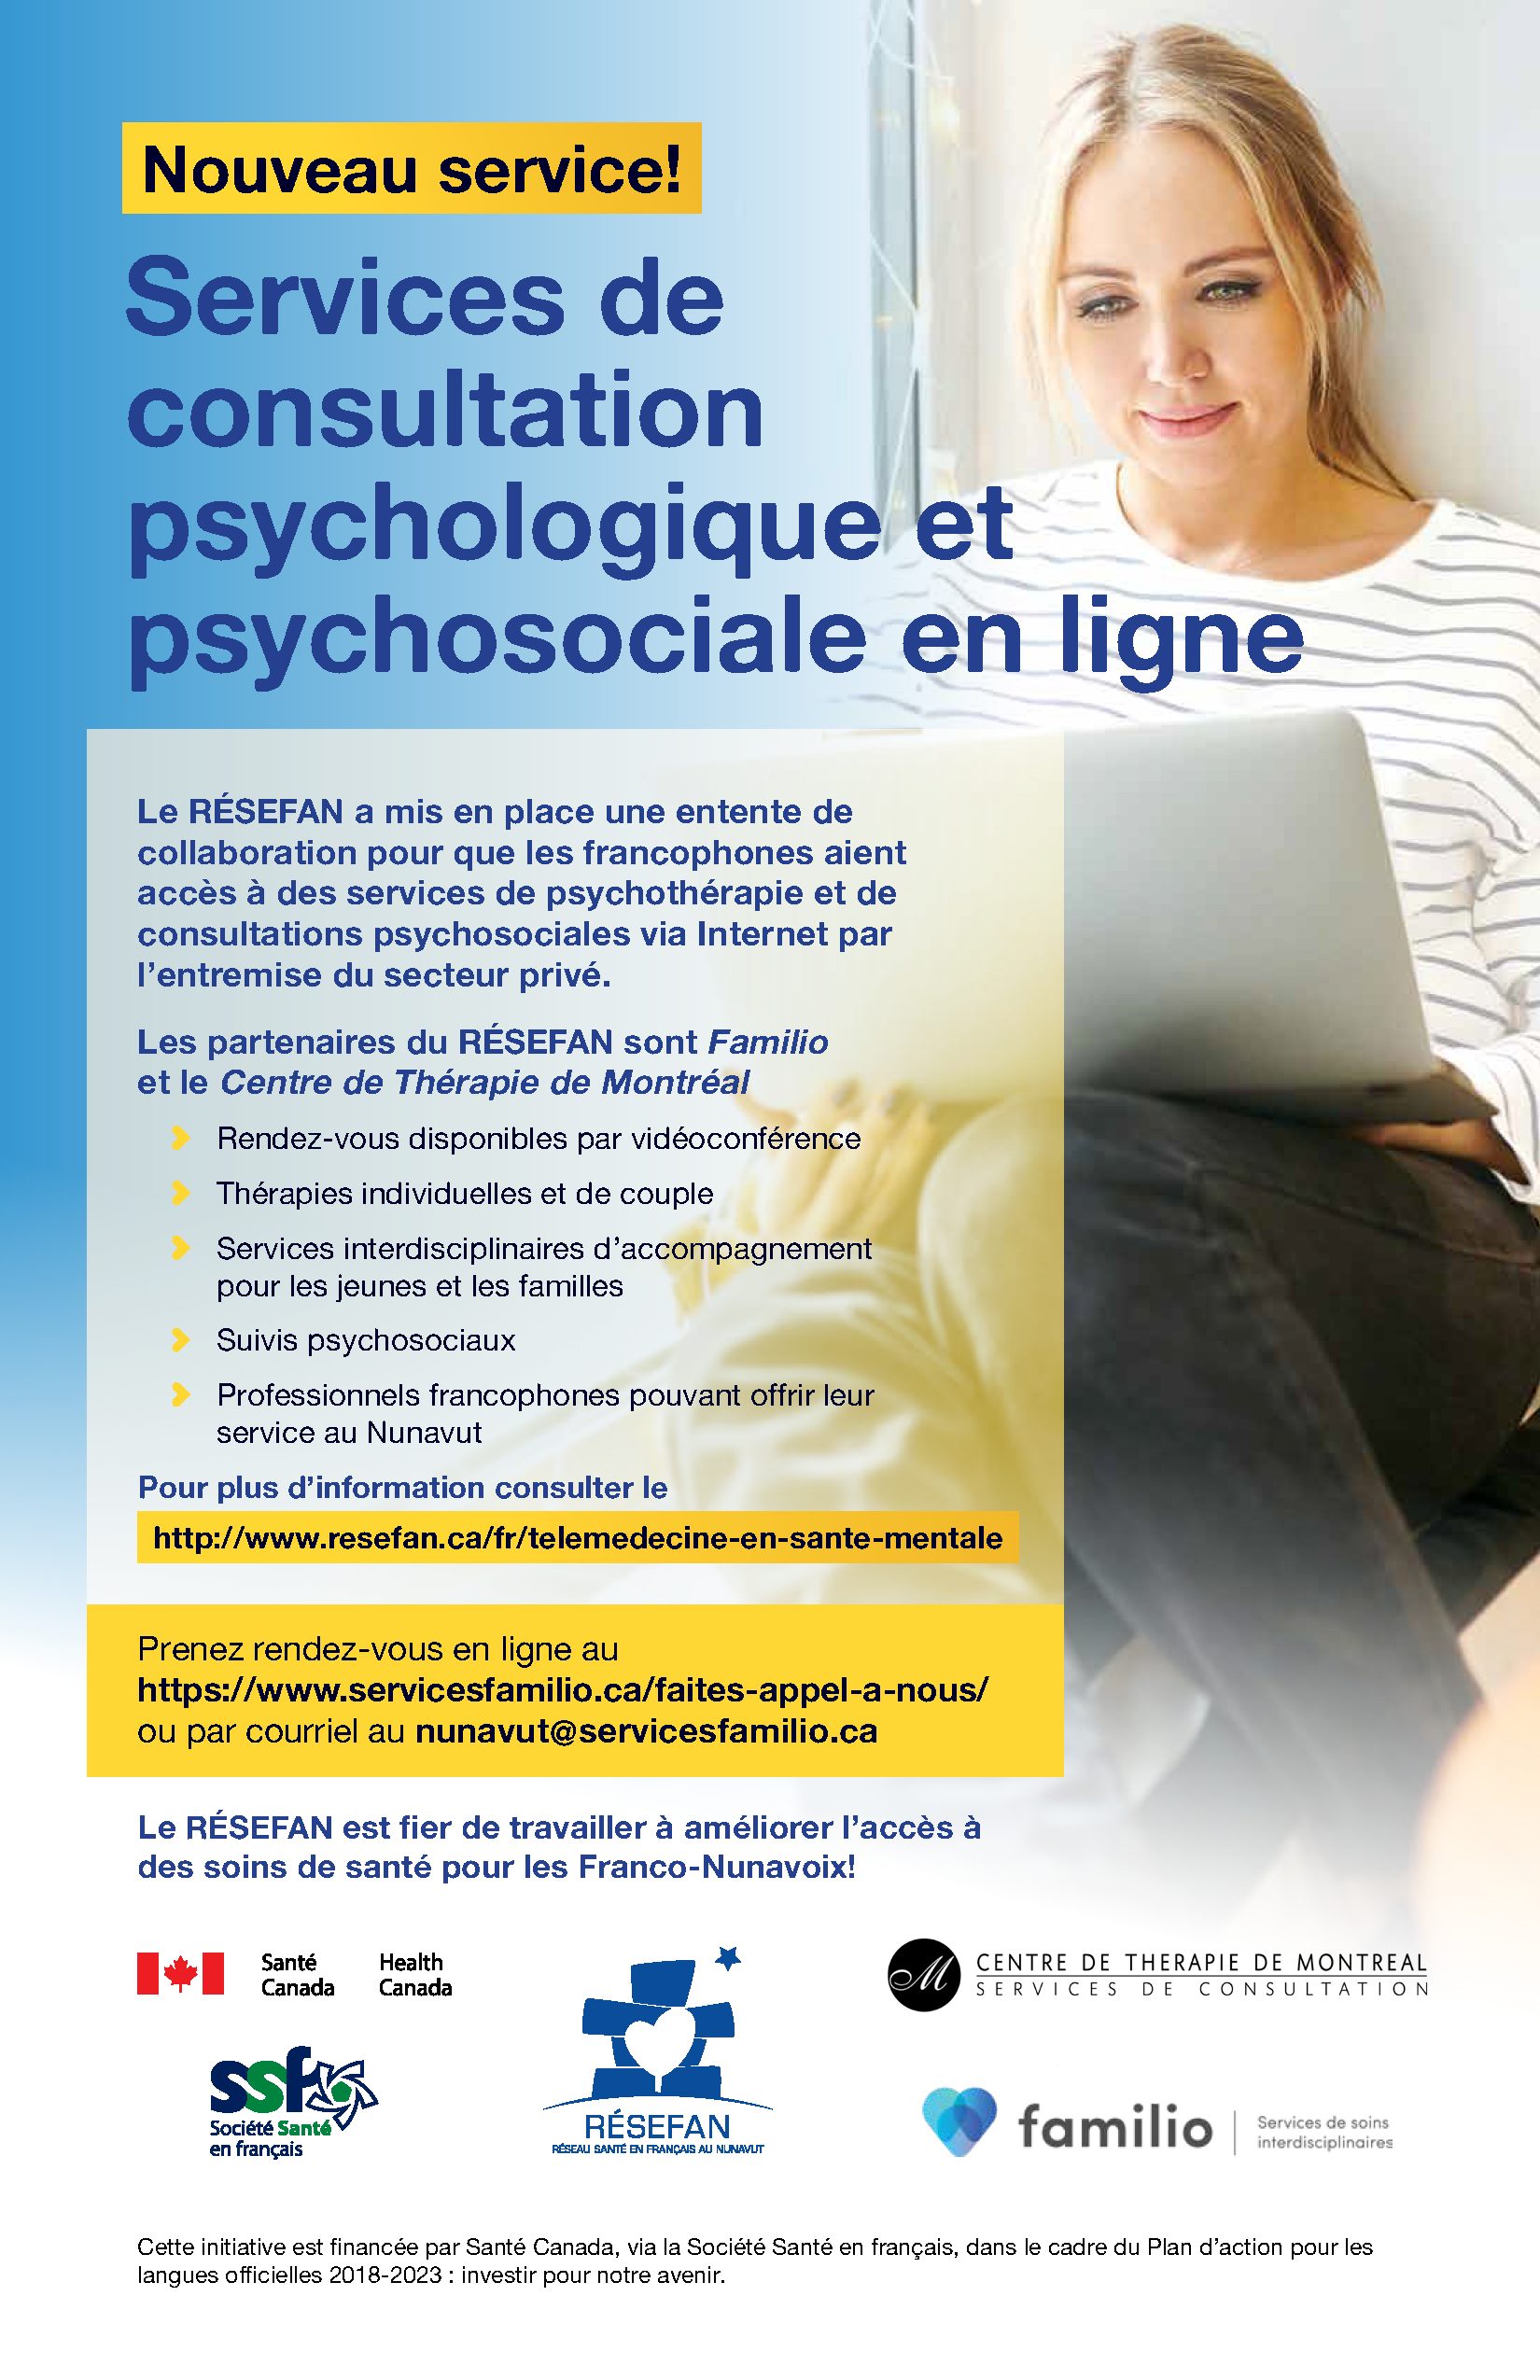 resefan-e-counselling-poster-11x17-fr-rev02-1